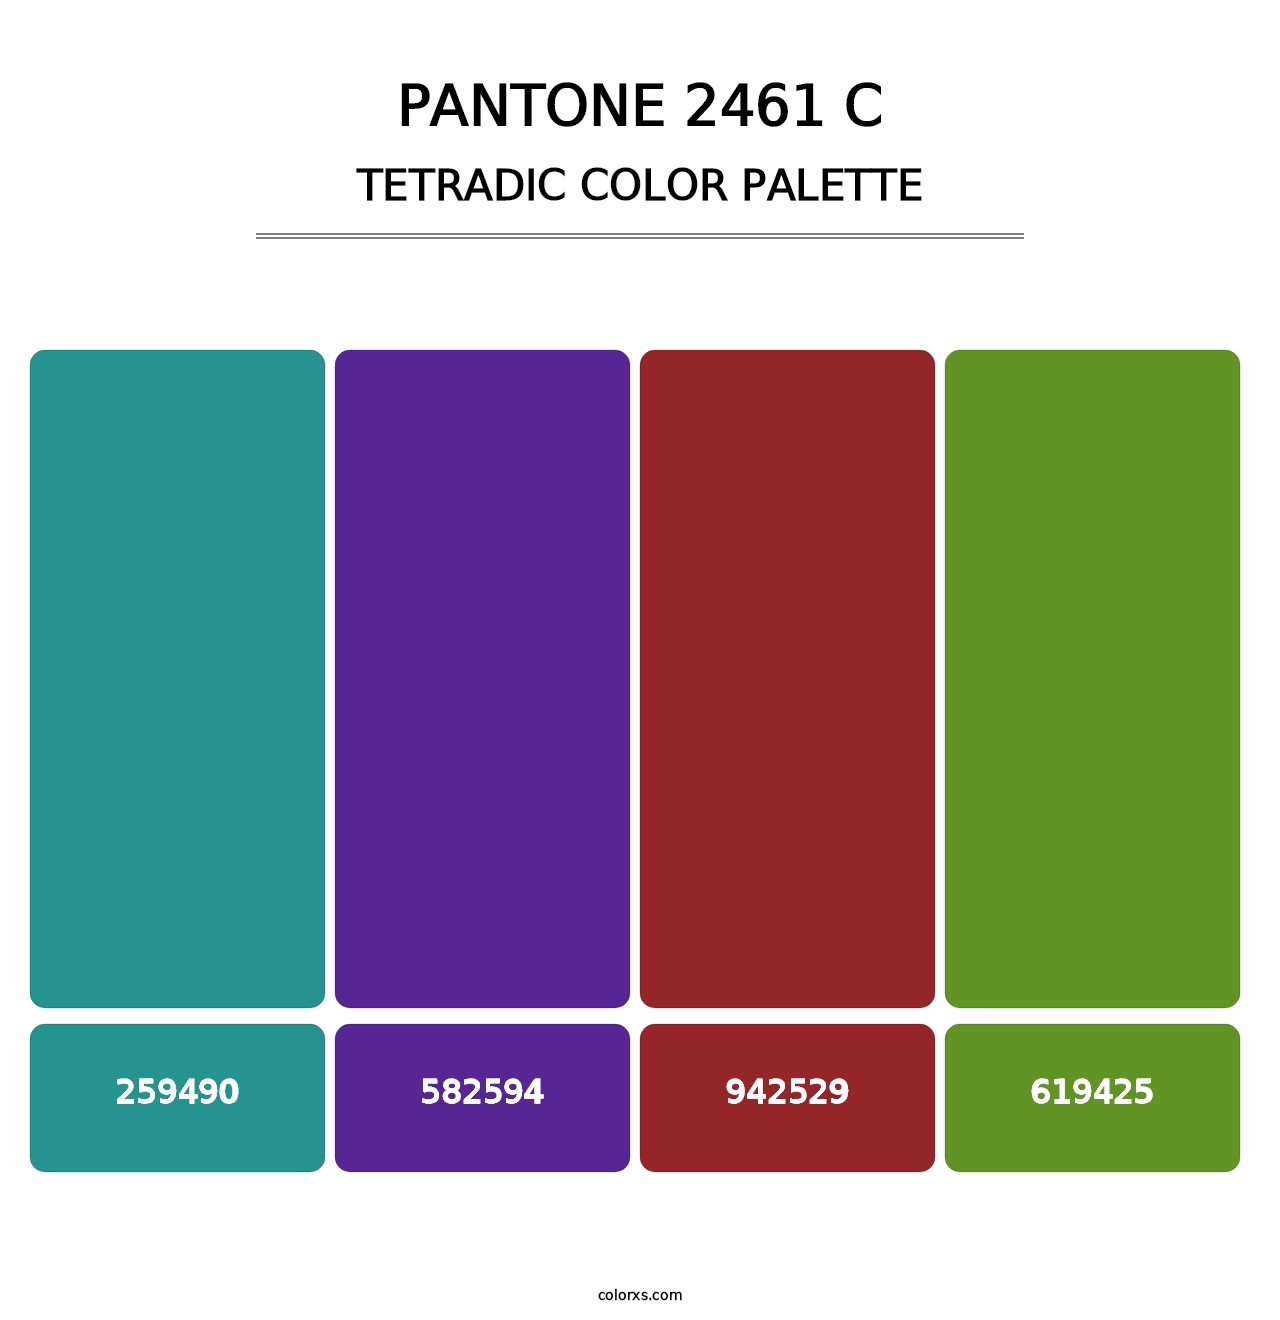 PANTONE 2461 C - Tetradic Color Palette